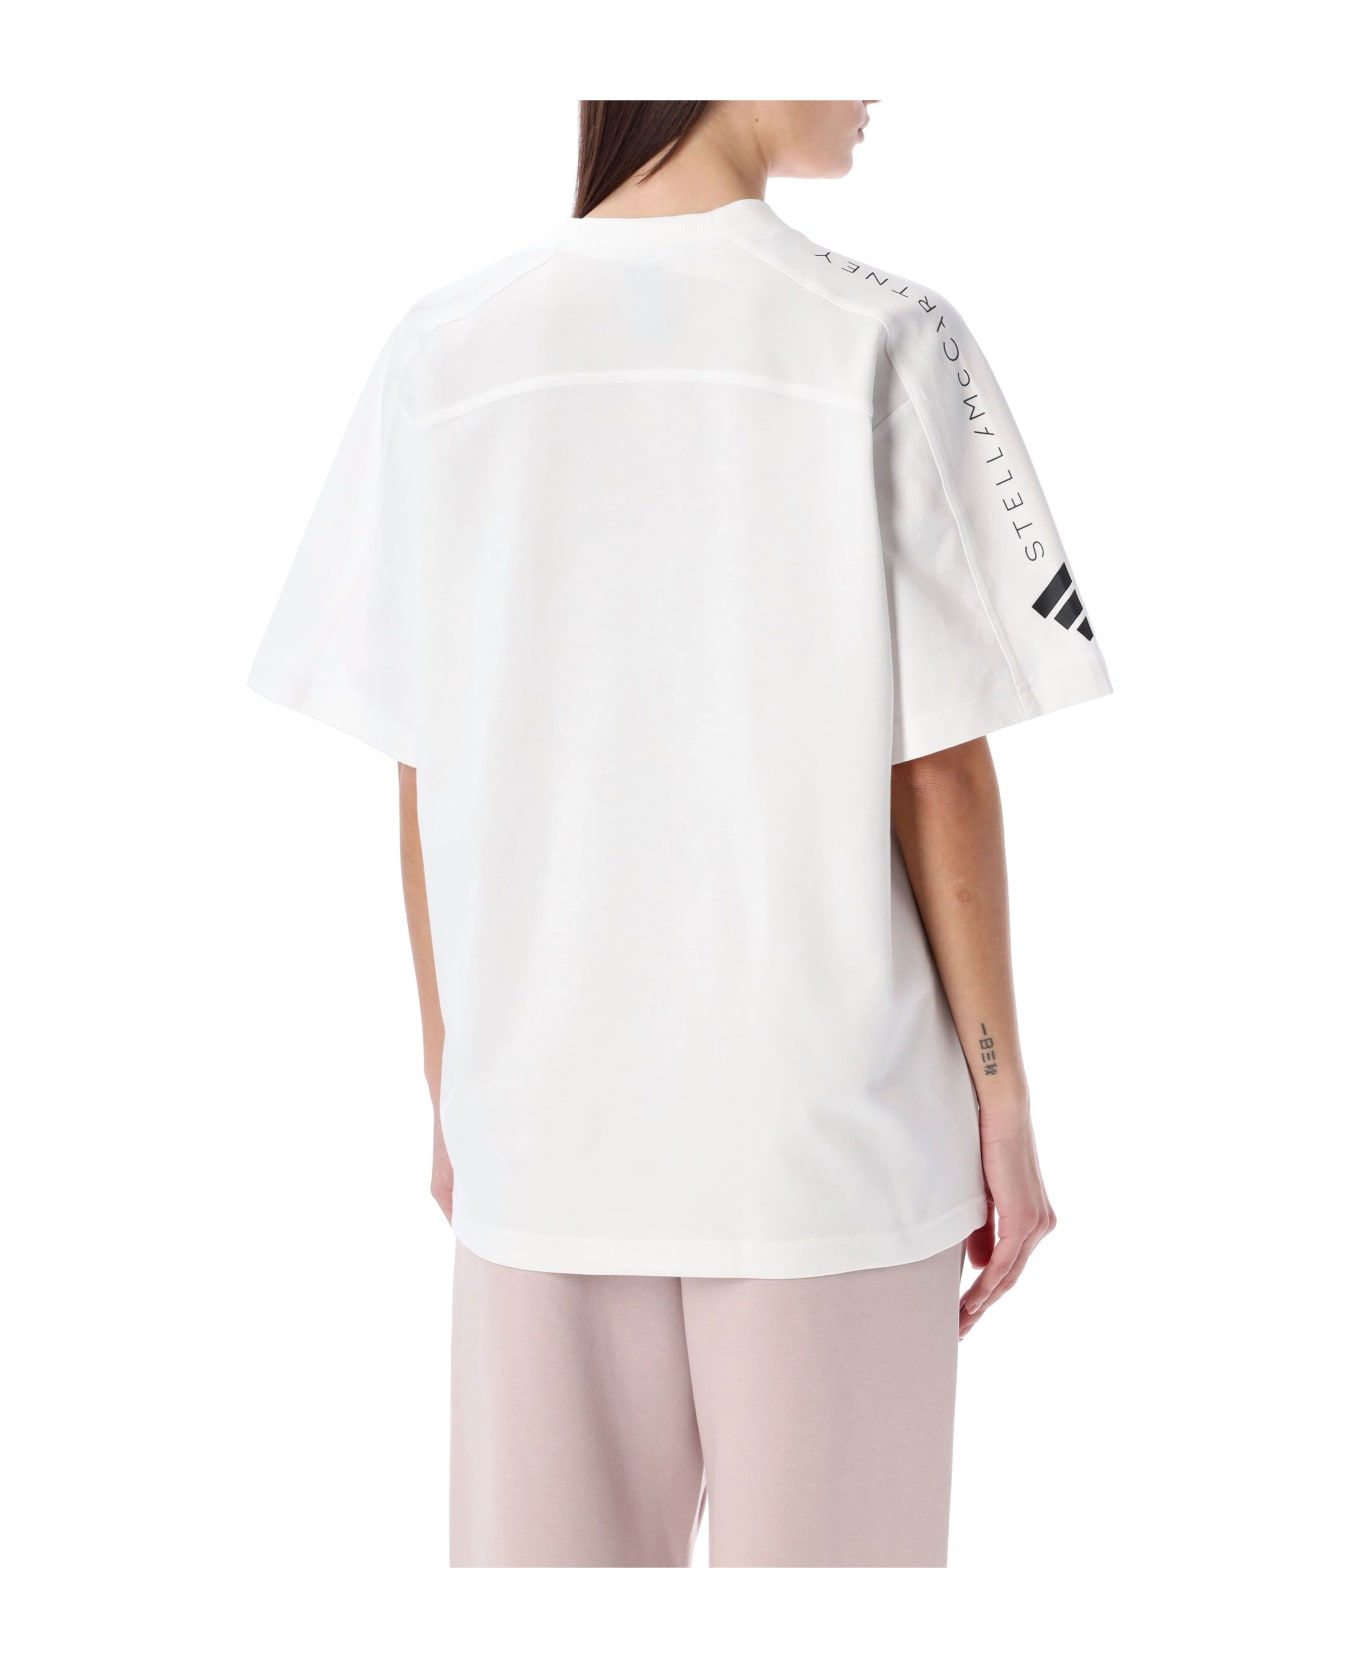 Adidas by Stella McCartney Truecasuals Logo T-shirt - WHITE Tシャツ